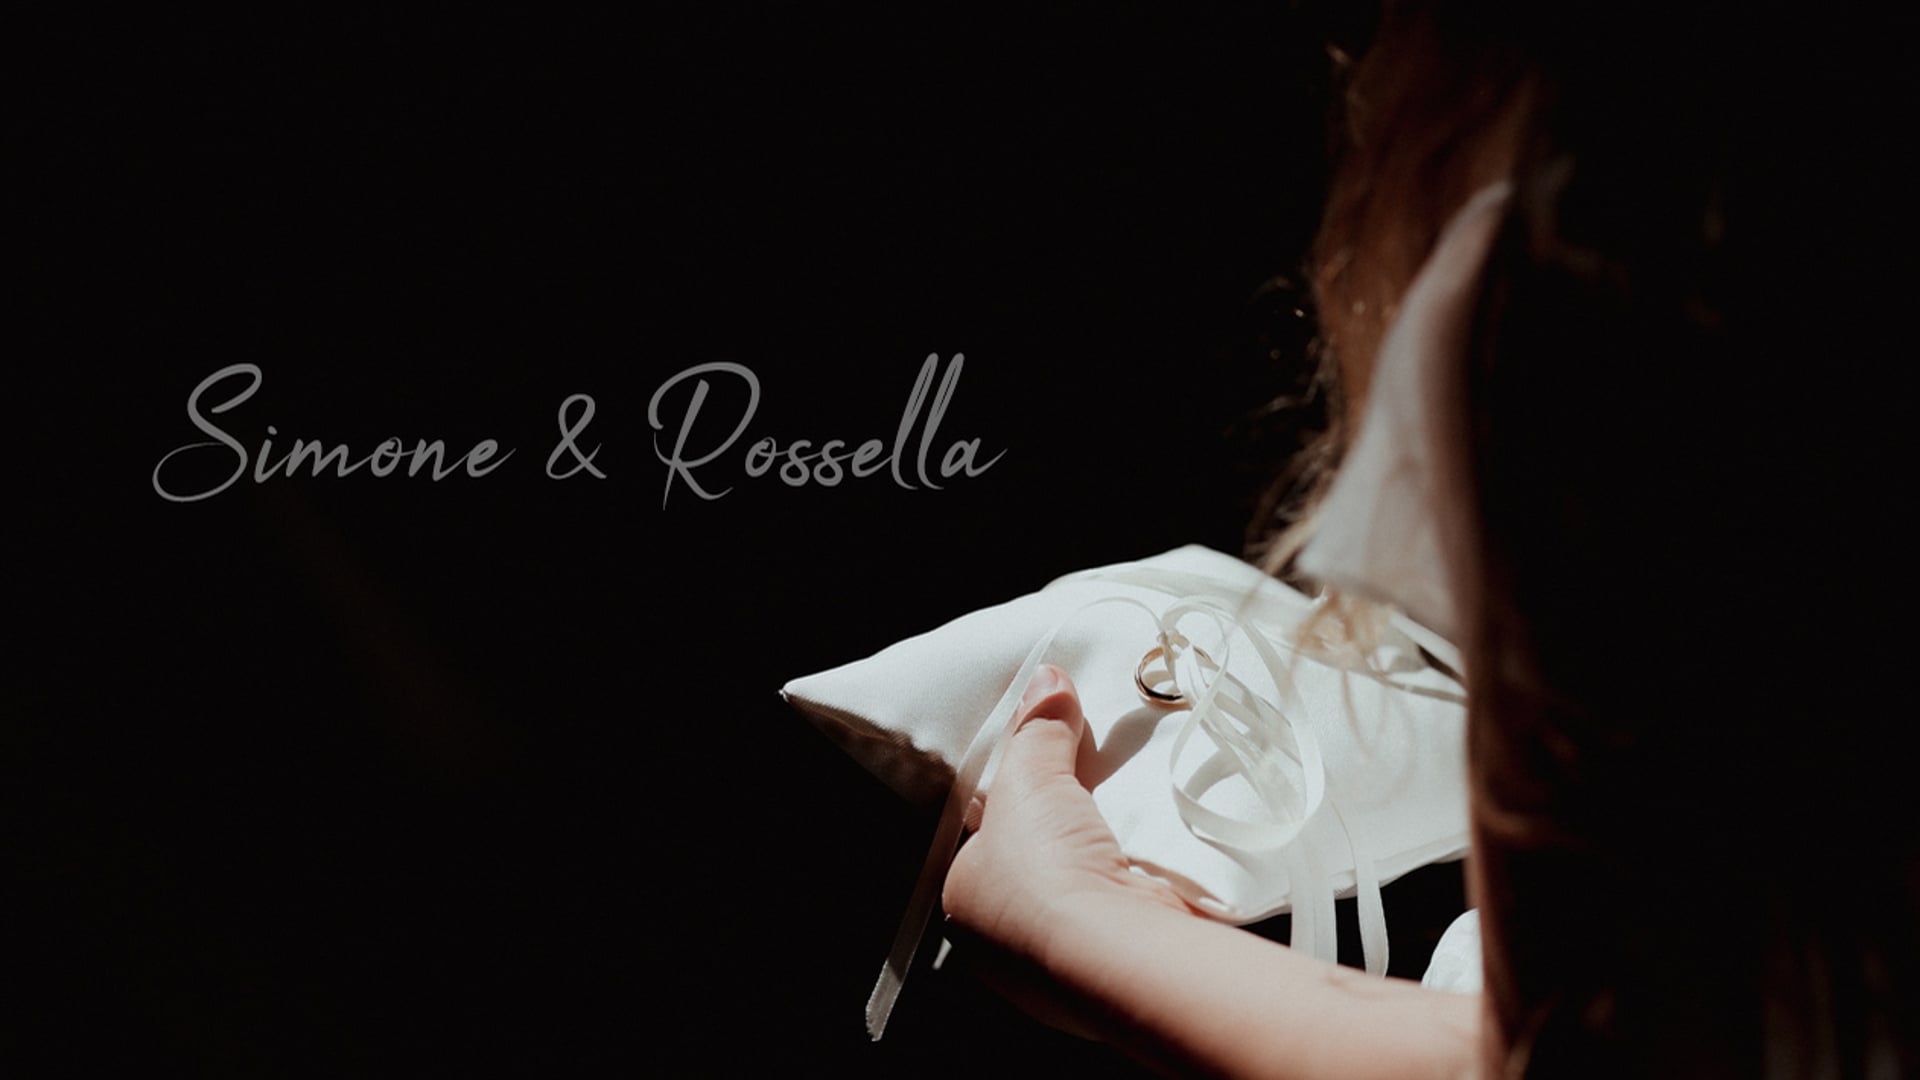 *** Simone & Rossella ***